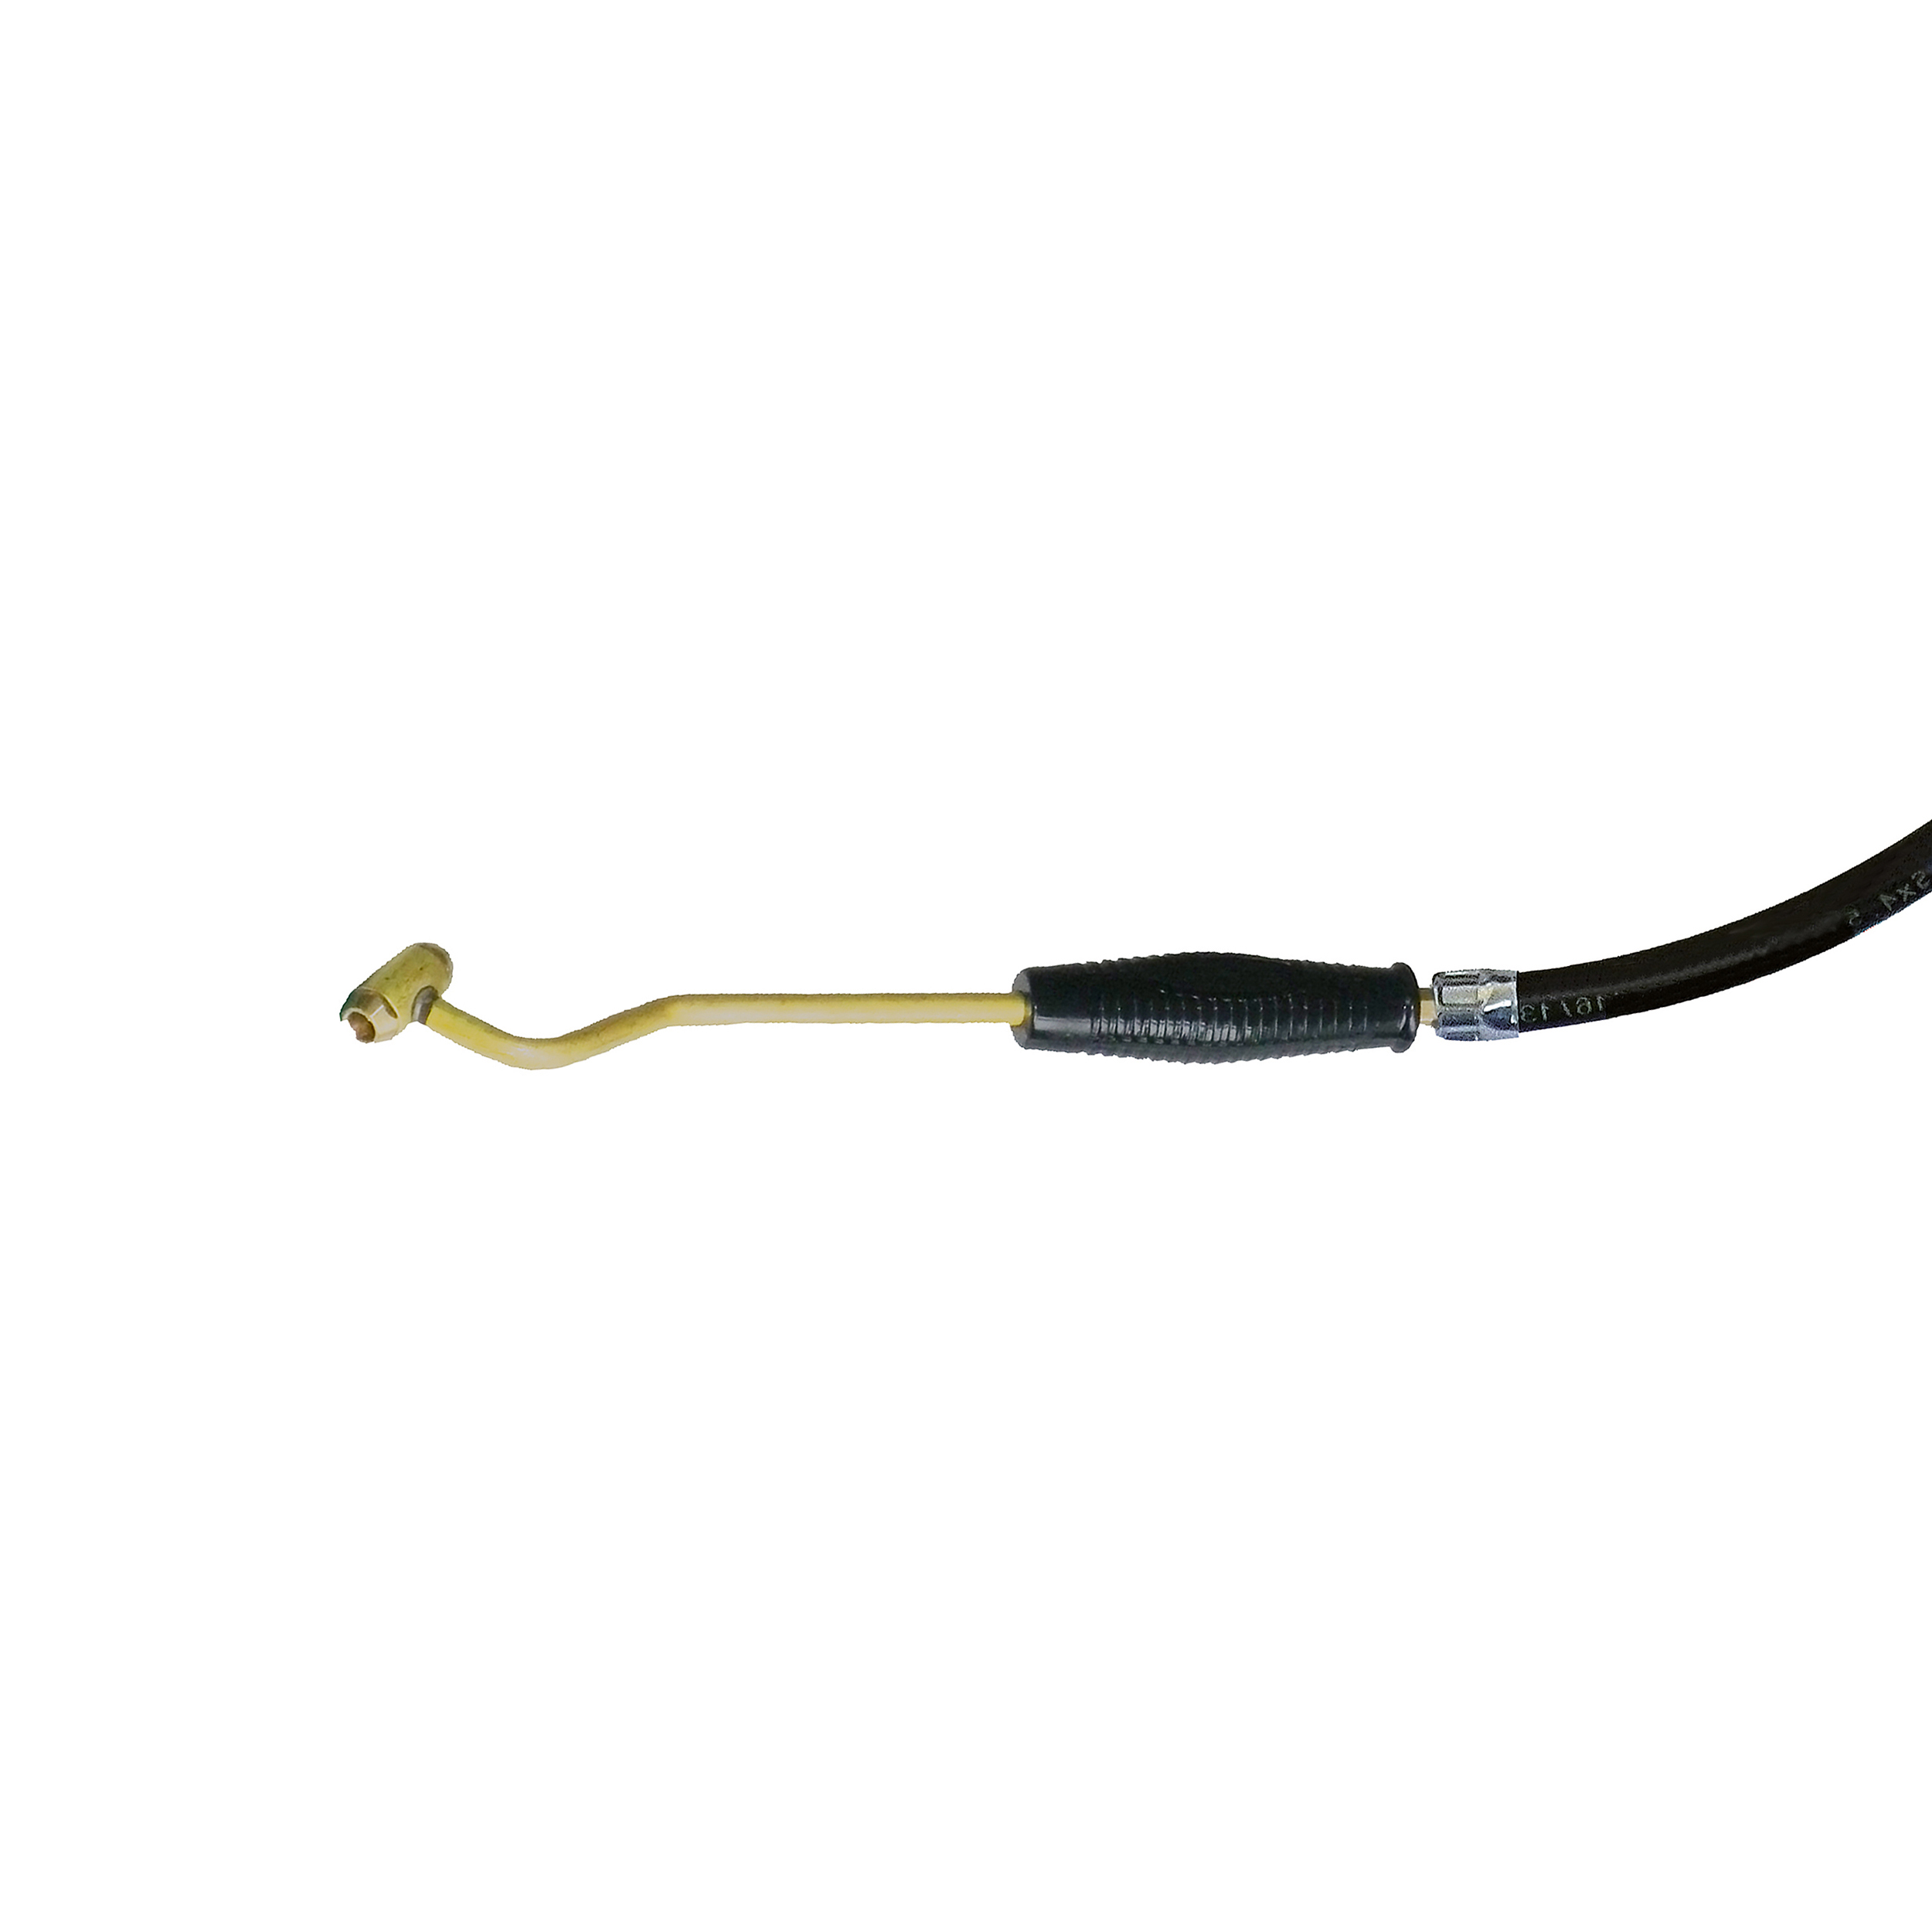 Filling hose, length: 0.5 m, rotatable, PVC, black, G1/4a, filling station plug up to 25 bar/362 psi